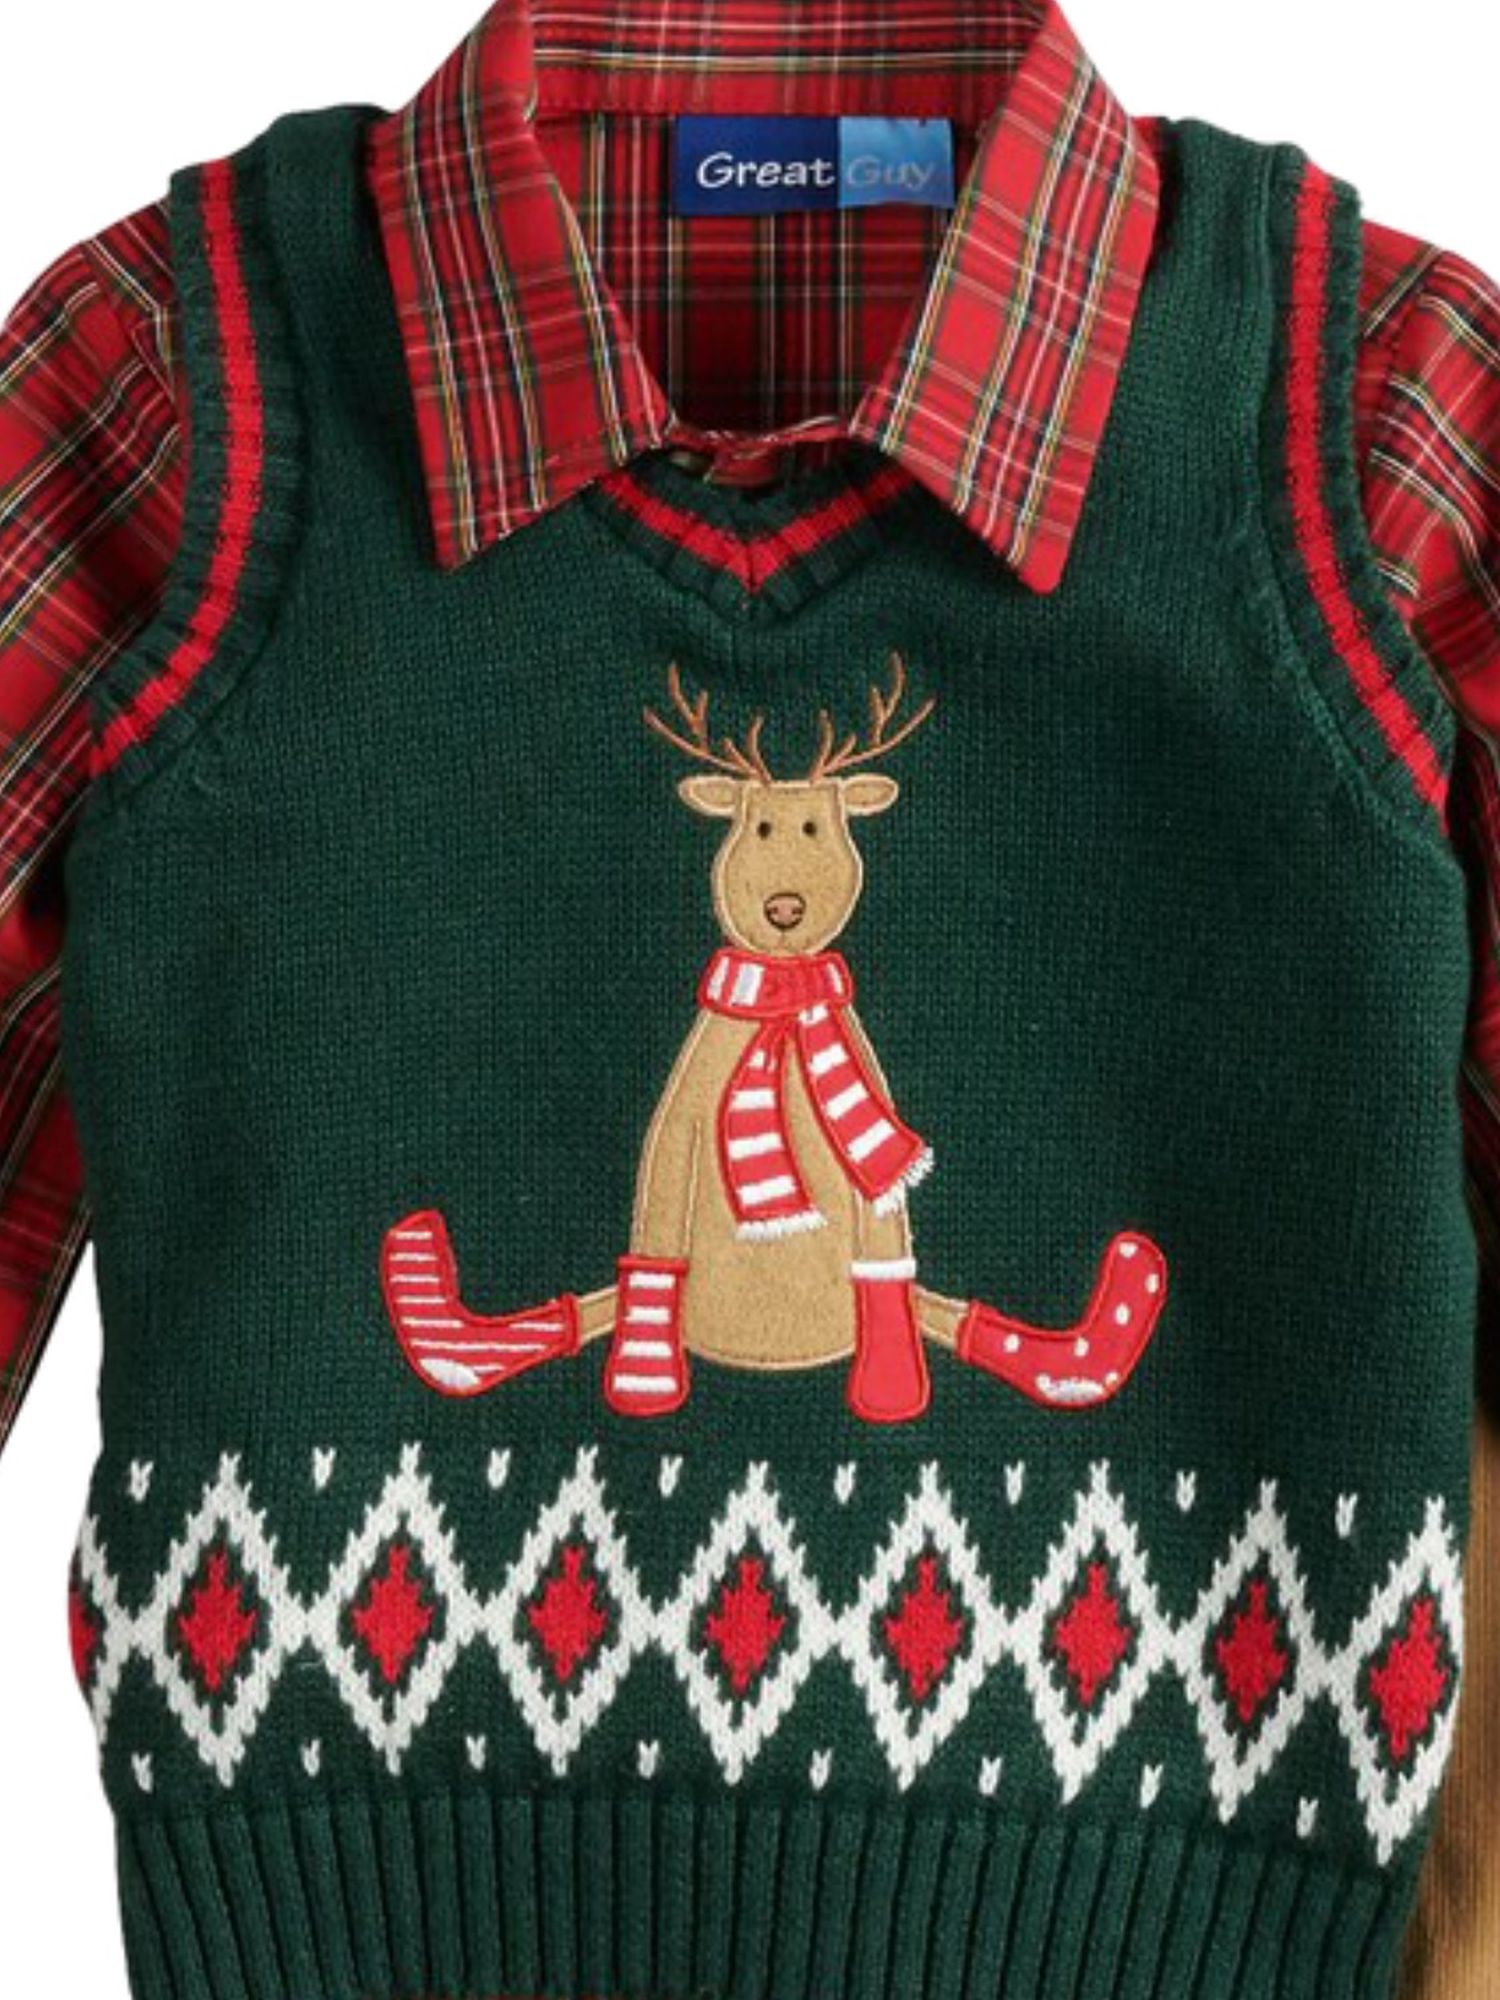 Great Guy Toddler Boys Holiday Reindeer Sweater Vest Plaid Shirt & Corduroy Pant Set